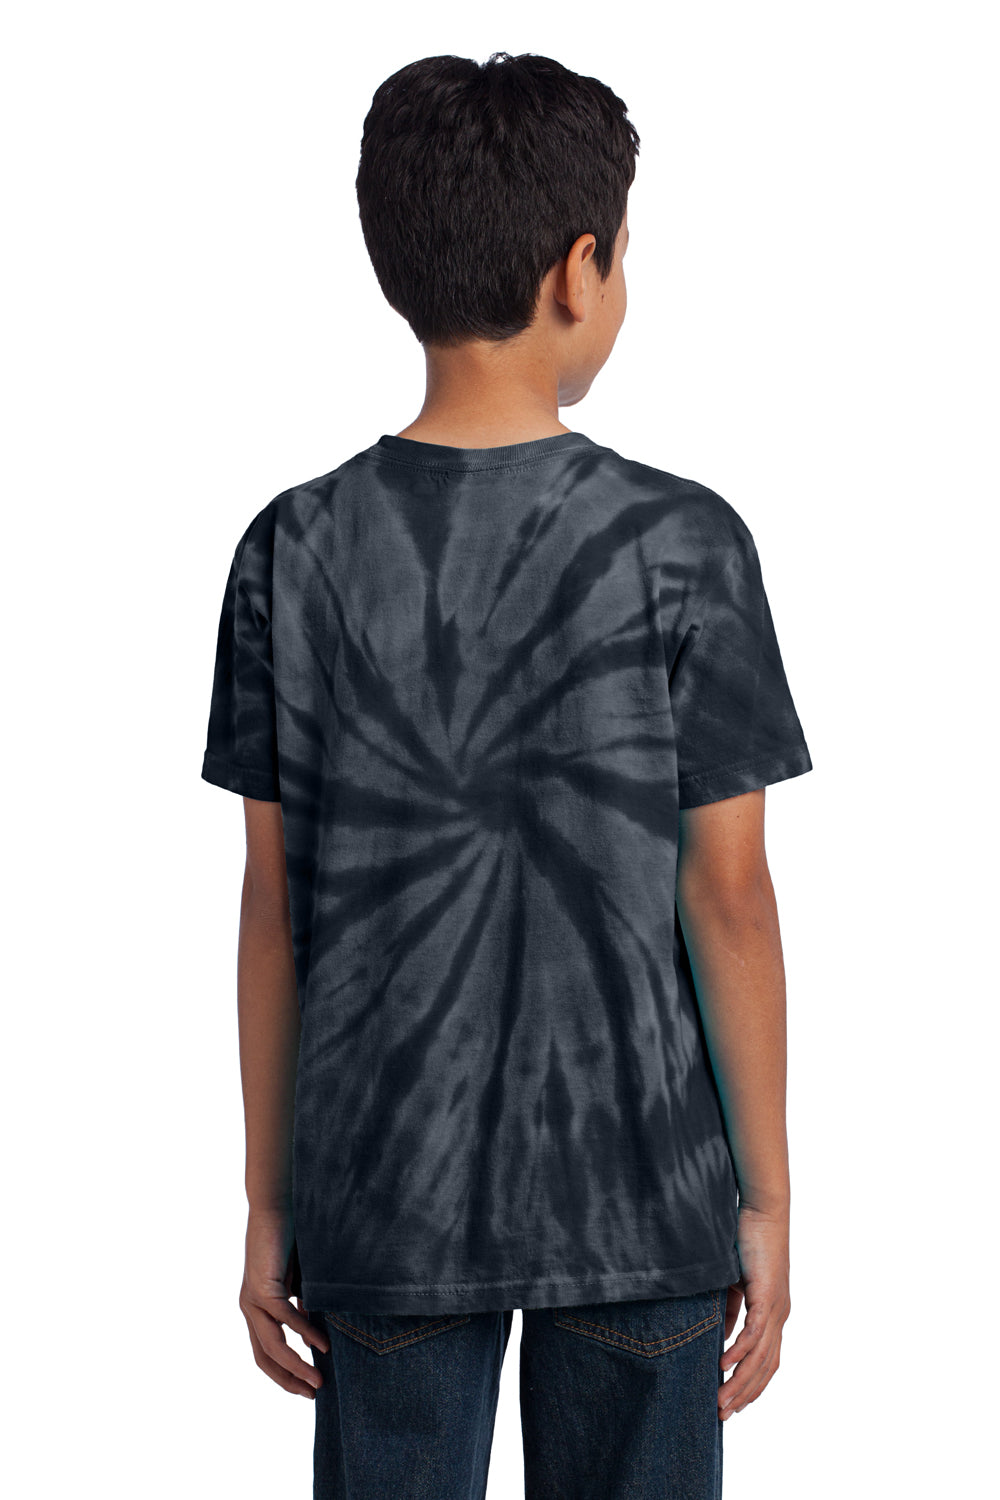 Port & Company PC147Y Youth Tie-Dye Short Sleeve Crewneck T-Shirt Black Back